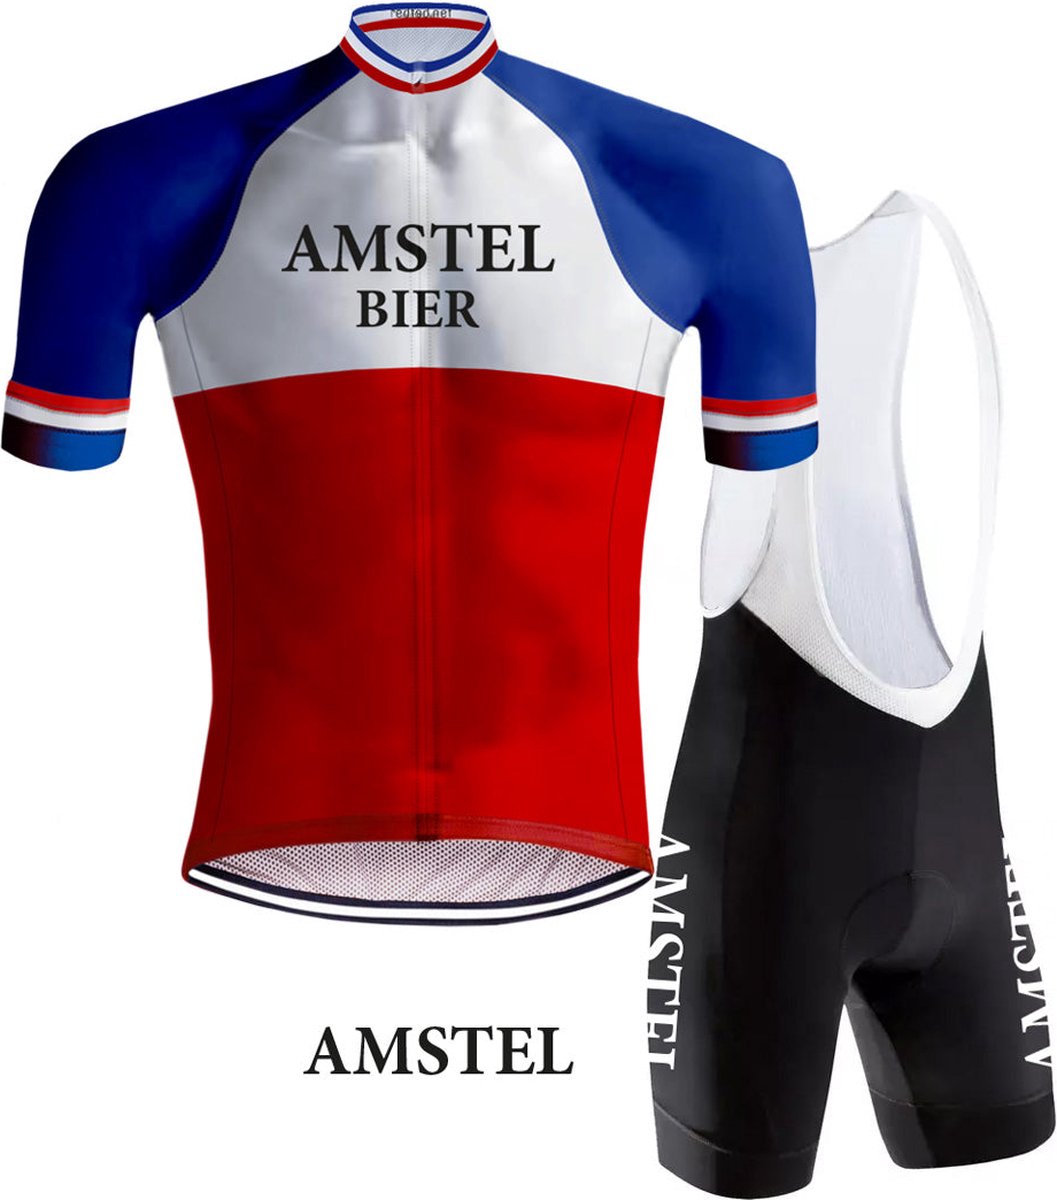 Retro Wielertenue Amstel Bier Rood/Blauw - REDTED (3XL)